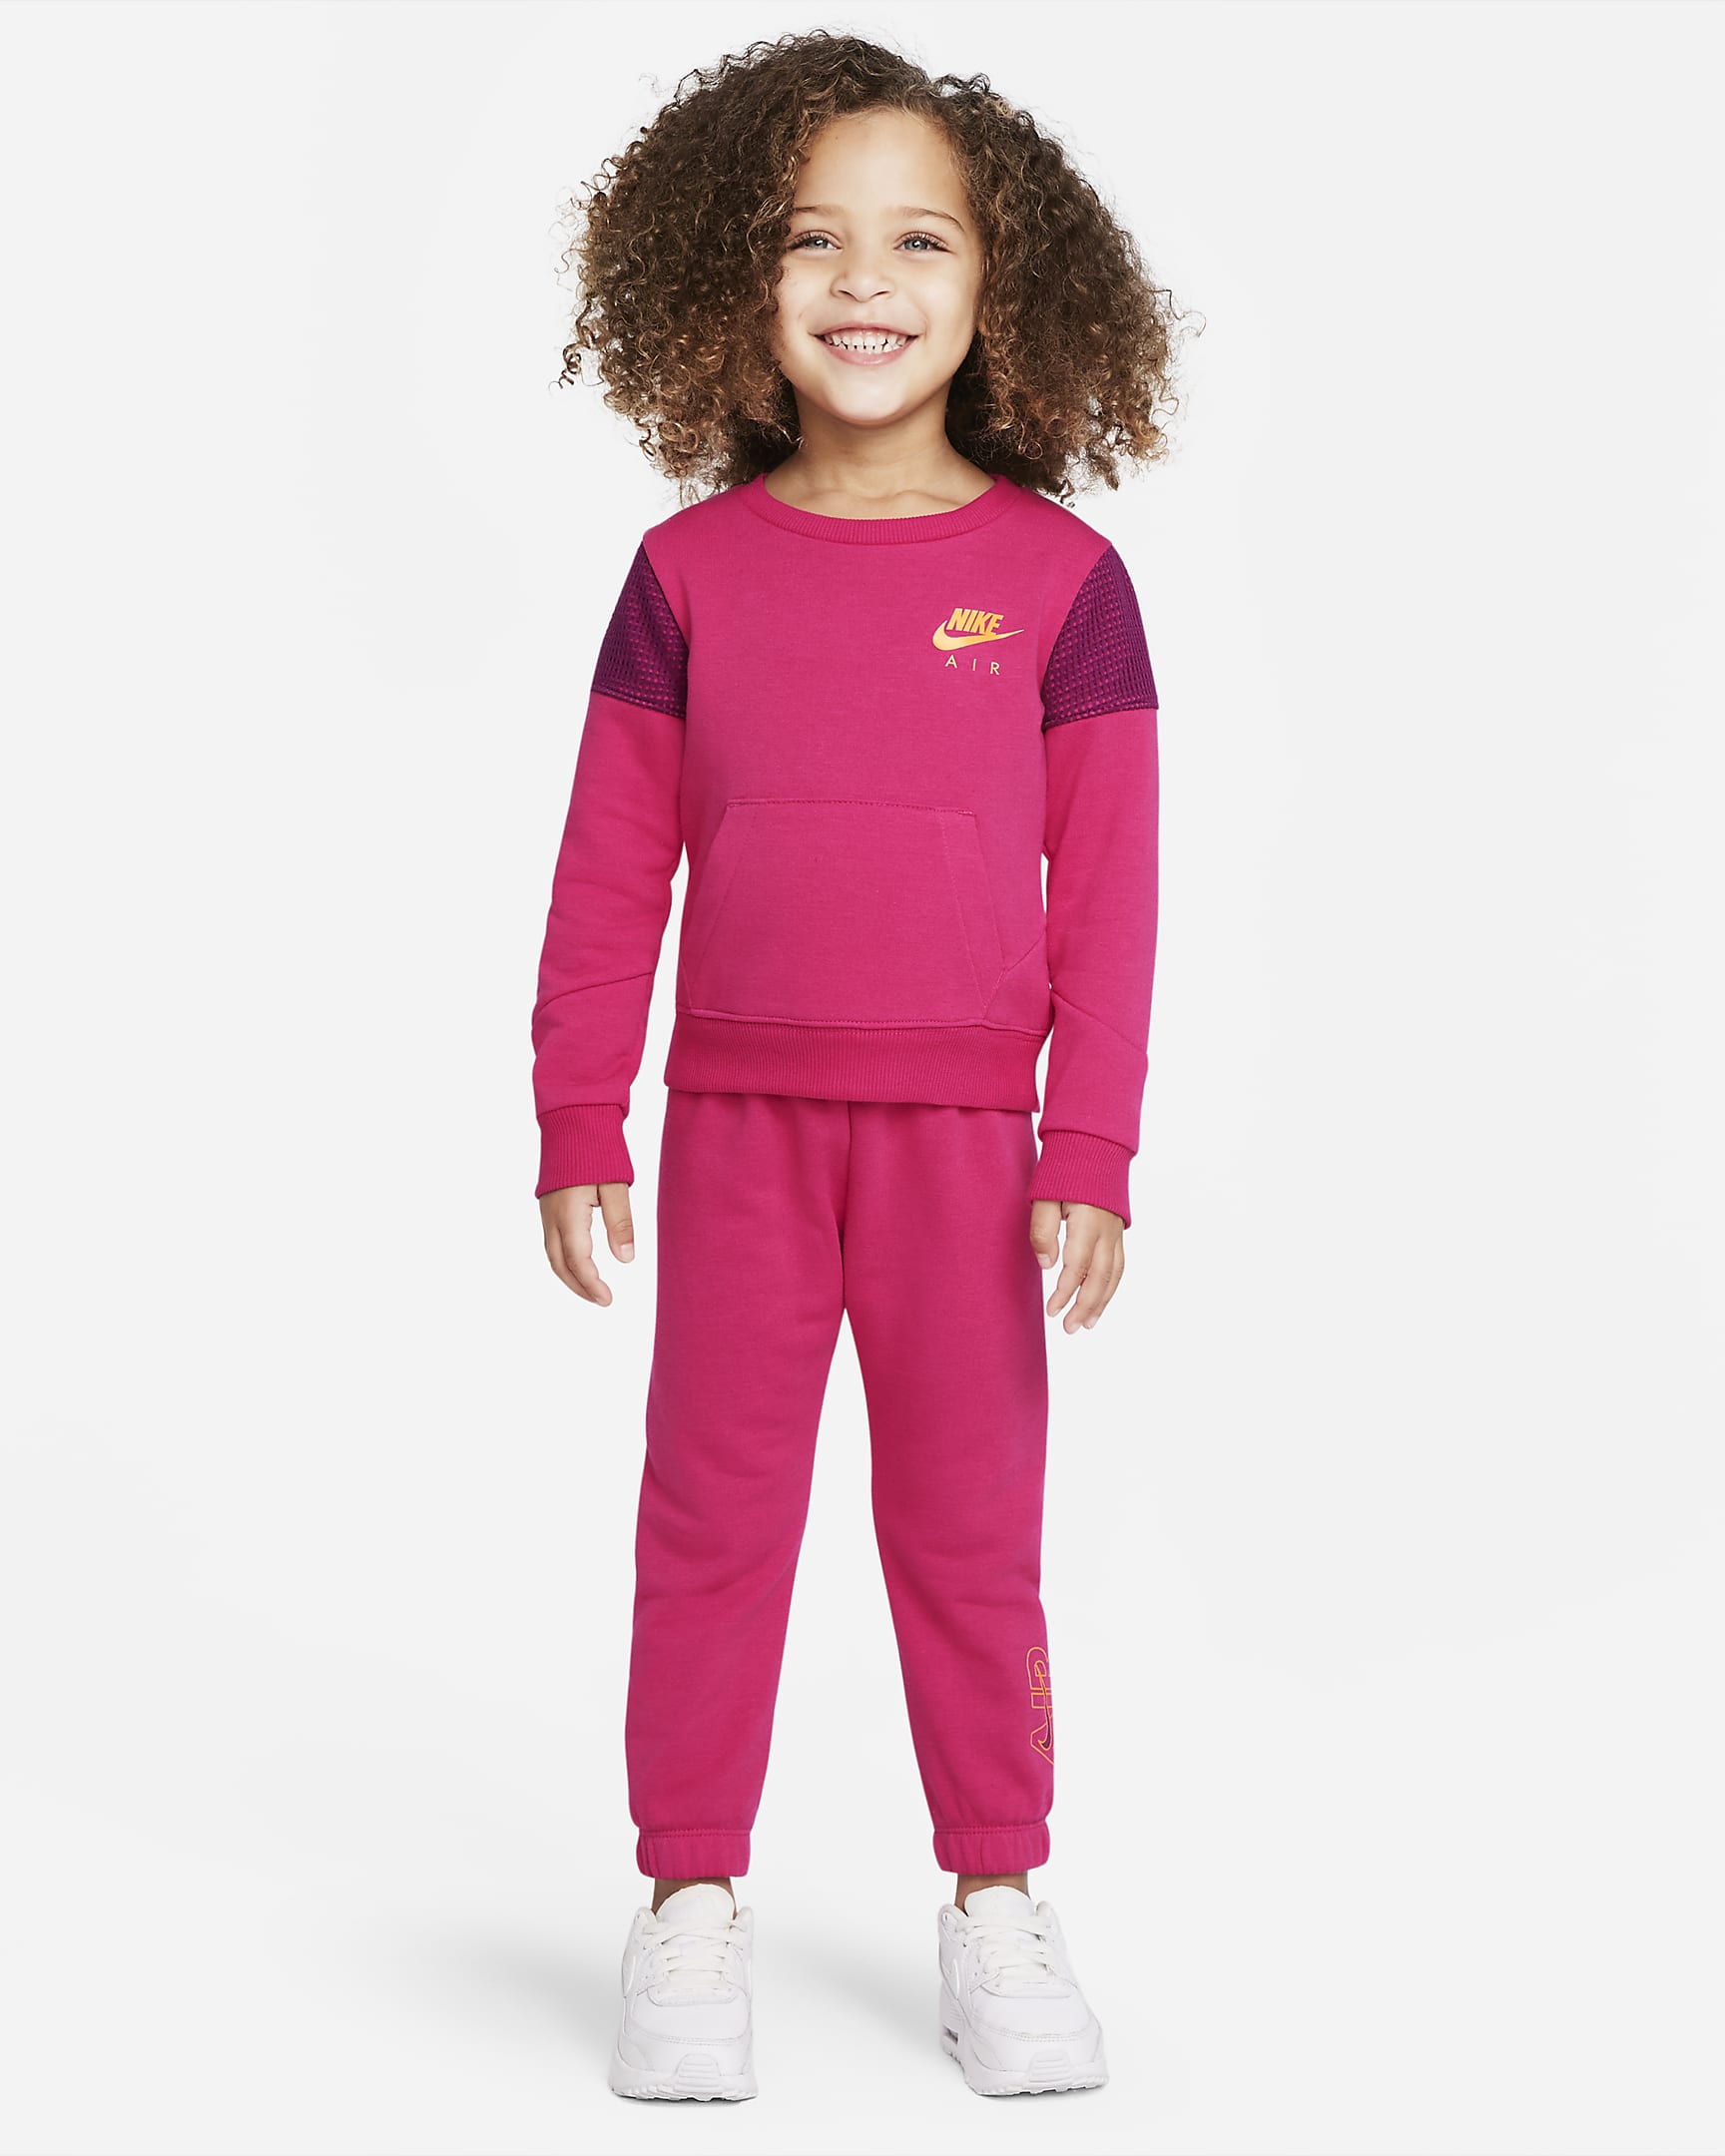 Nike Toddler Crew and Pants Set Rush Pink